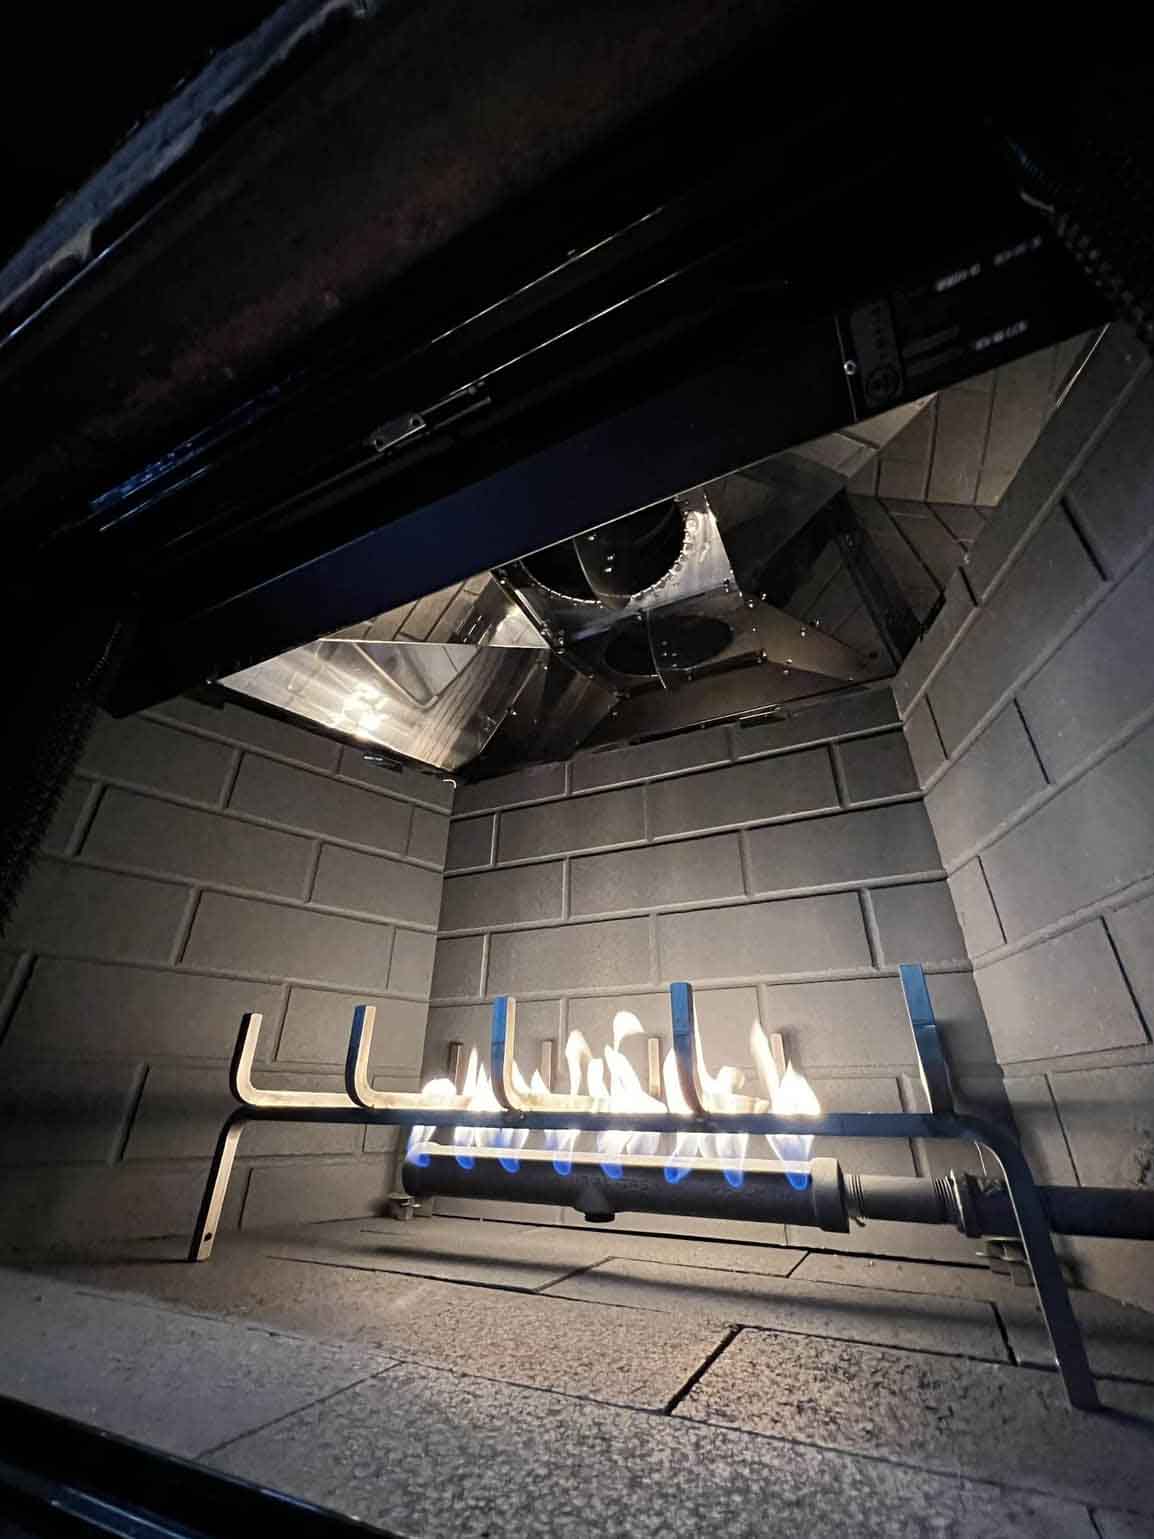 A gas fireplace.